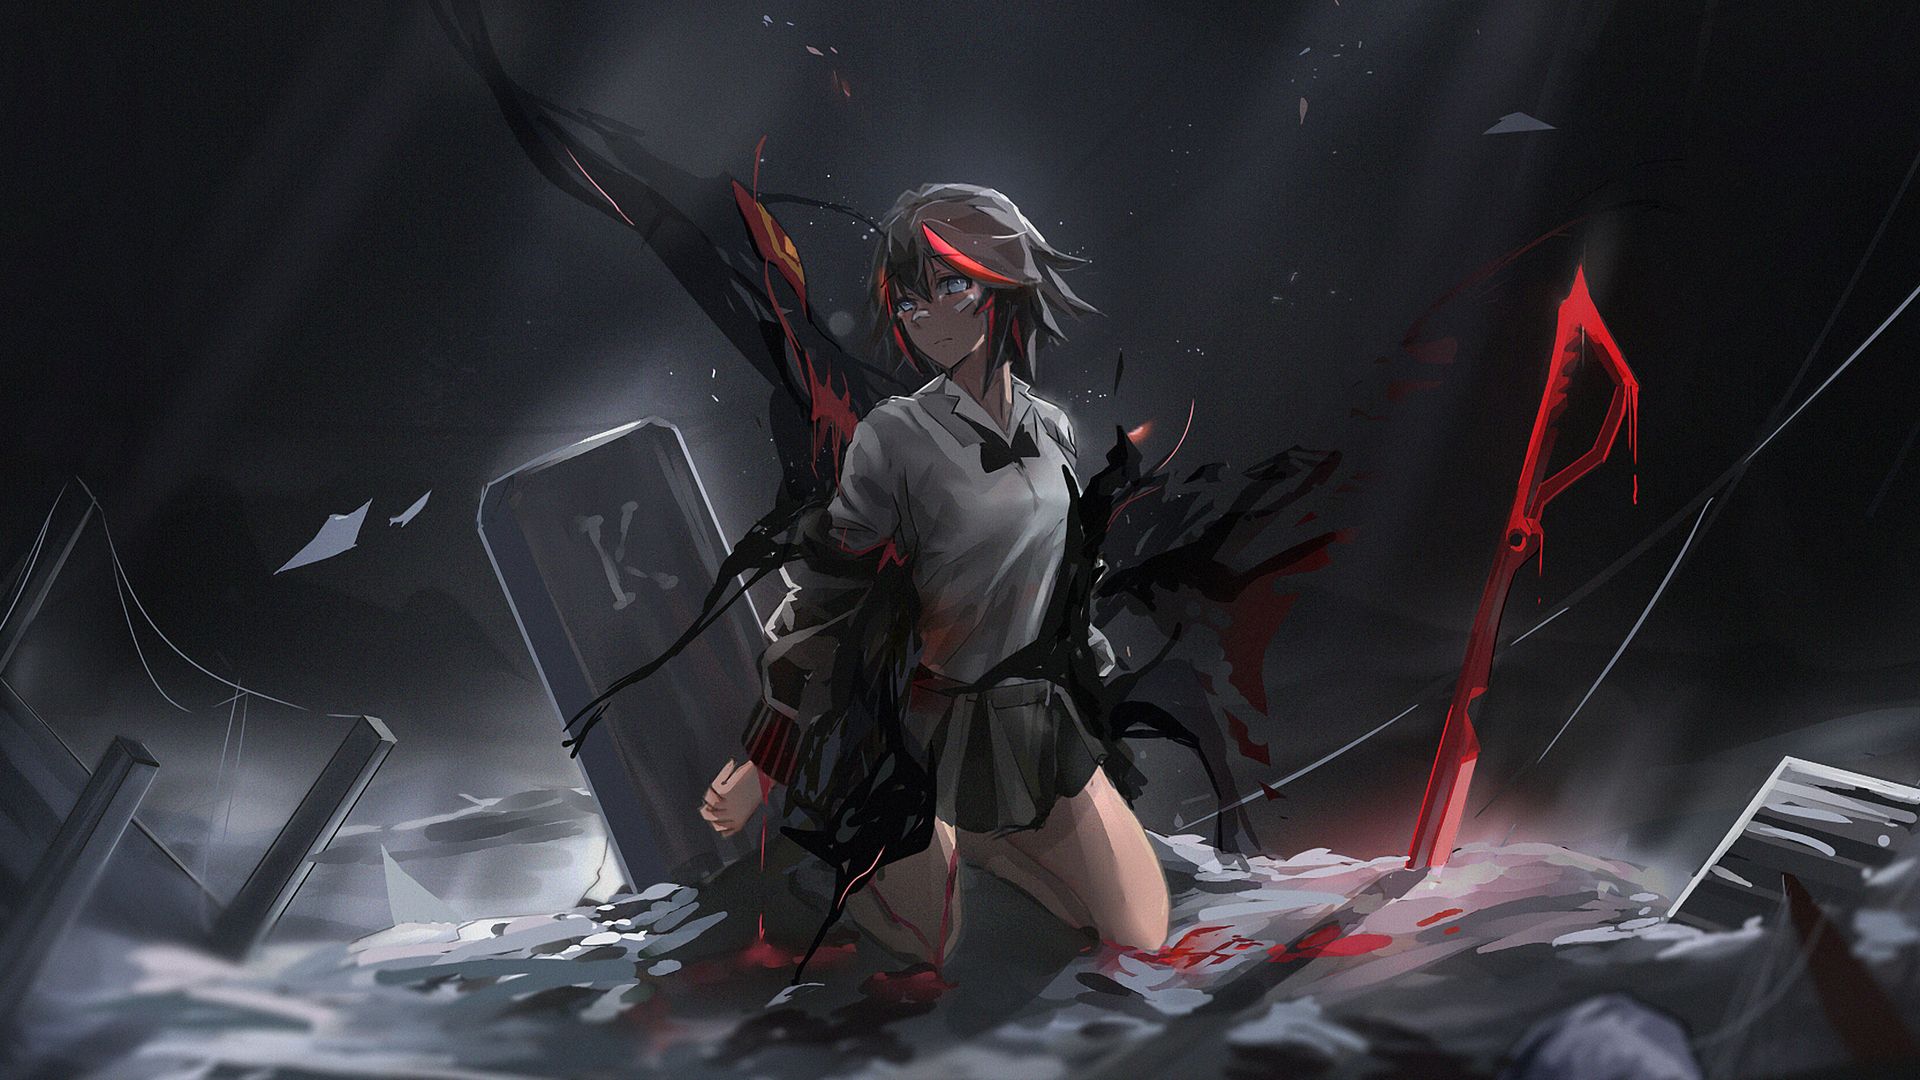 Desktop Wallpaper Ryūko Matoi, Kill La Kill, Anime Girl, Dark, Anime, HD Image, Picture, Background, 7ac851